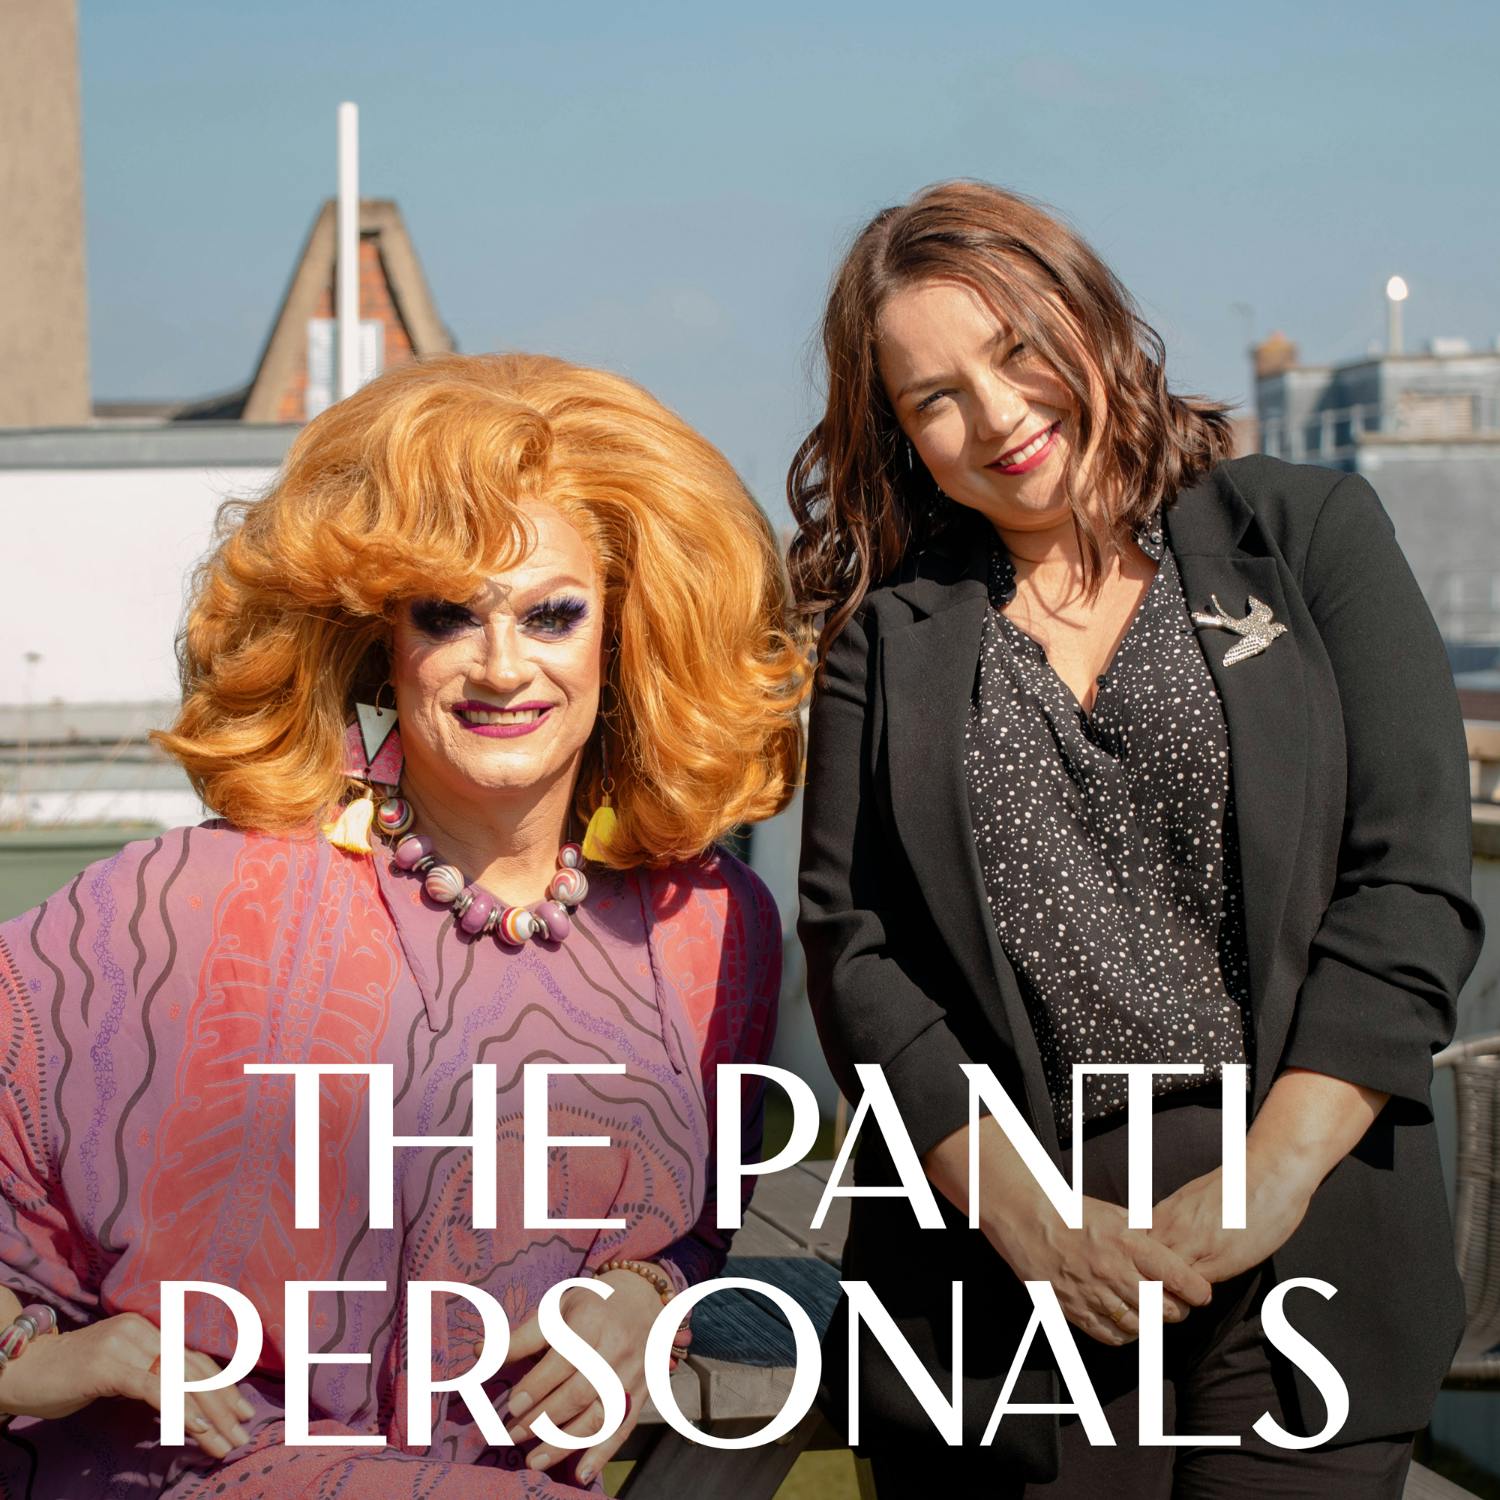 The Panti Personals S3 E1 Pauline Scanlon